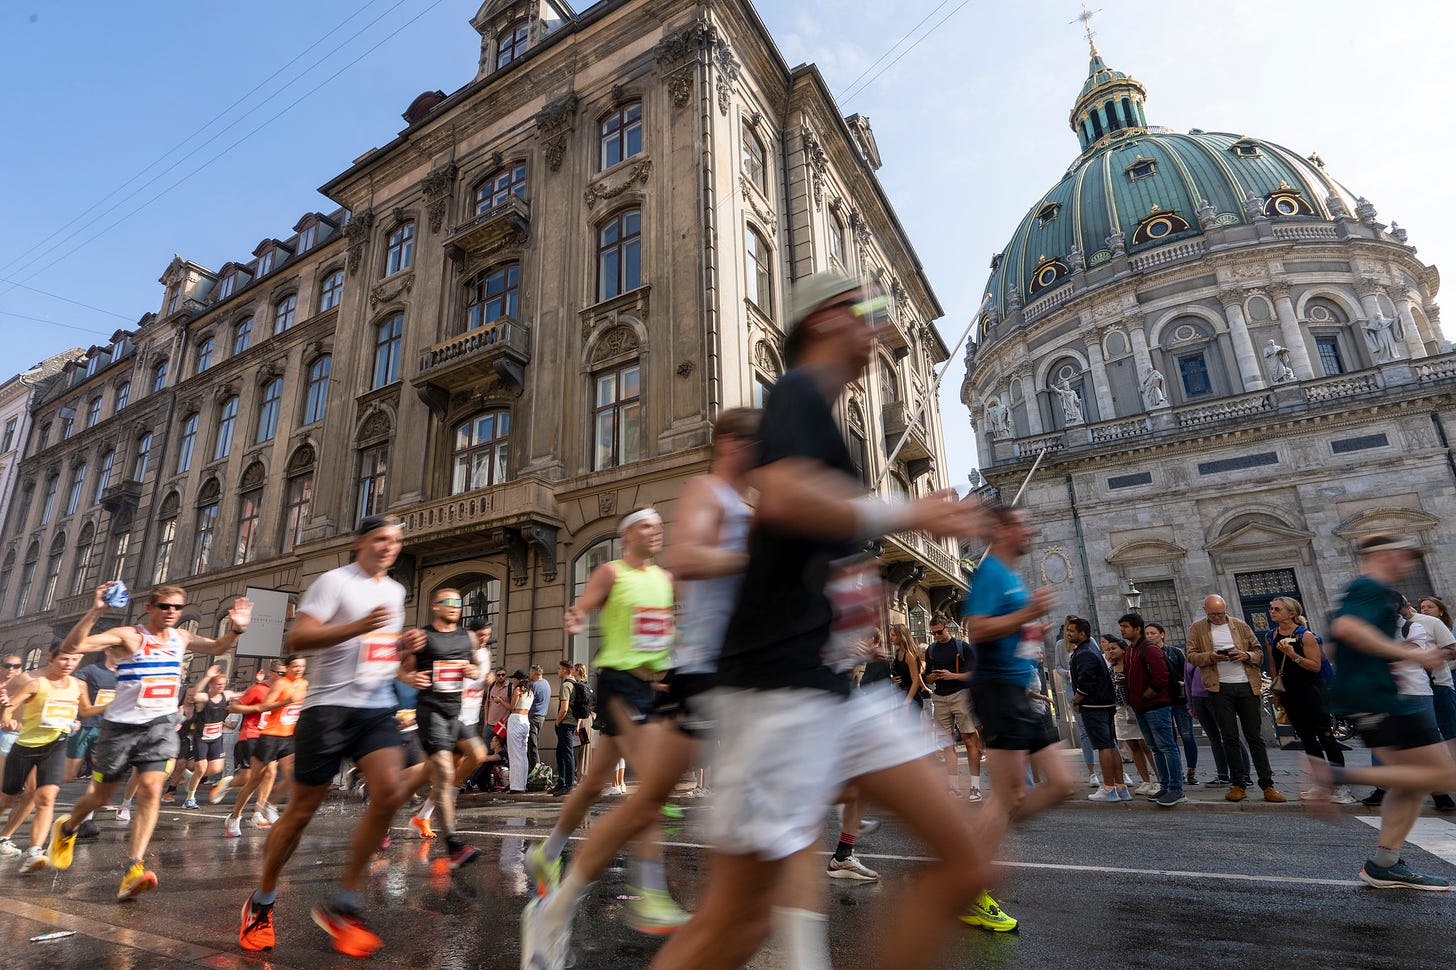 The Copenhagen Half Marathon course goes through the heart of the city